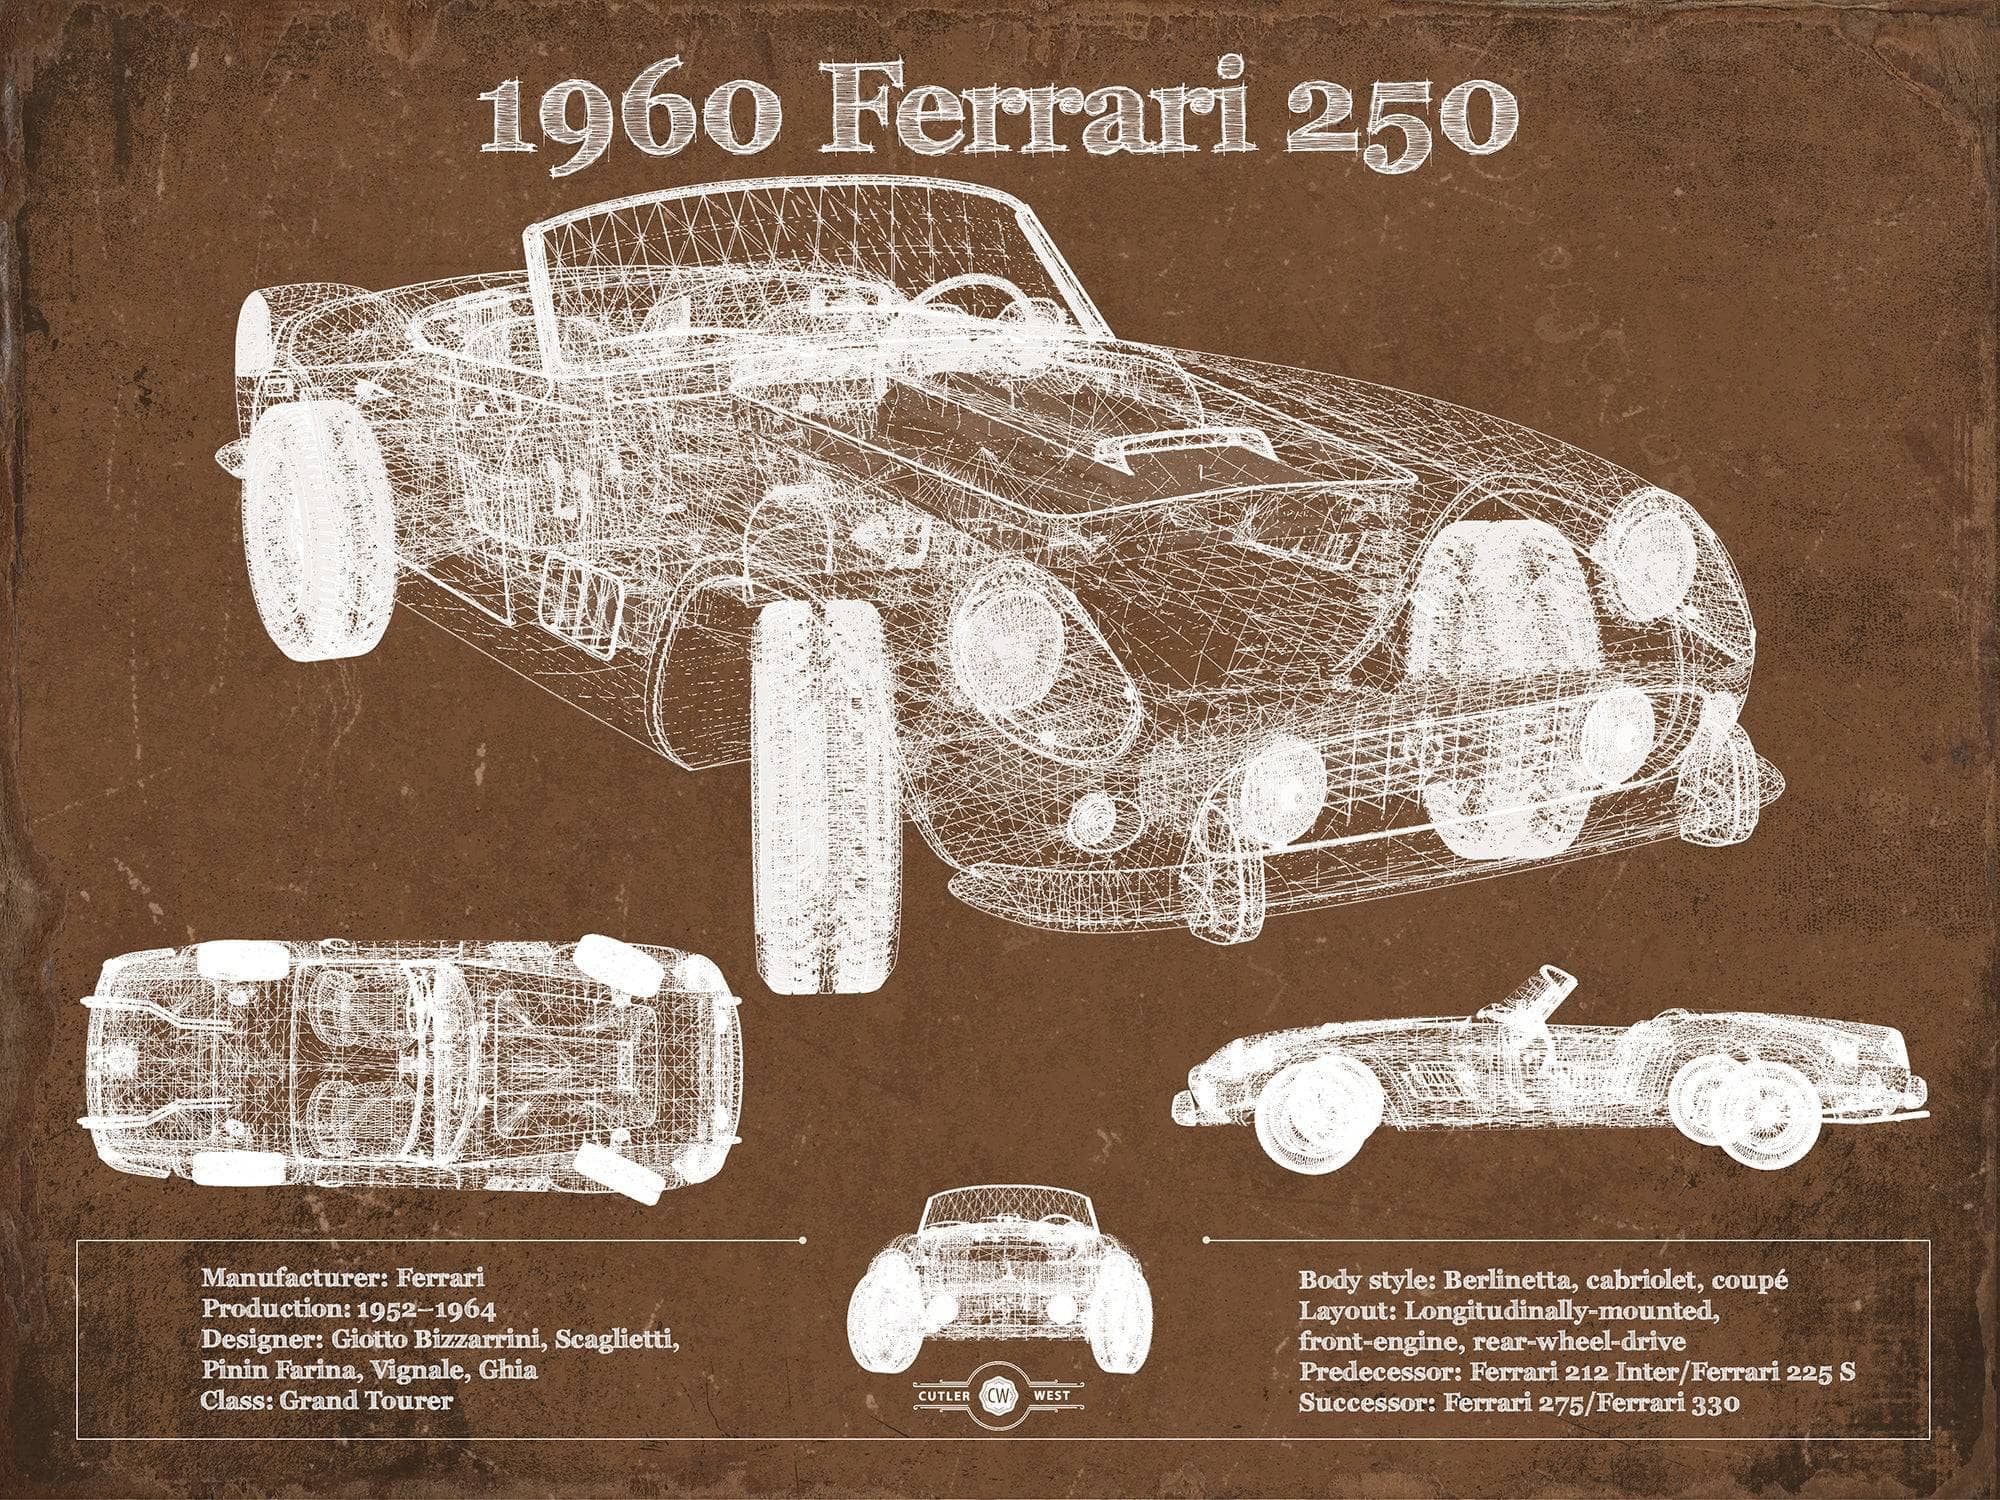 Cutler West Ferrari Collection 14" x 11" / Unframed 1960 Ferrari 250 Vintage Blueprint Auto Print 933350034_10093